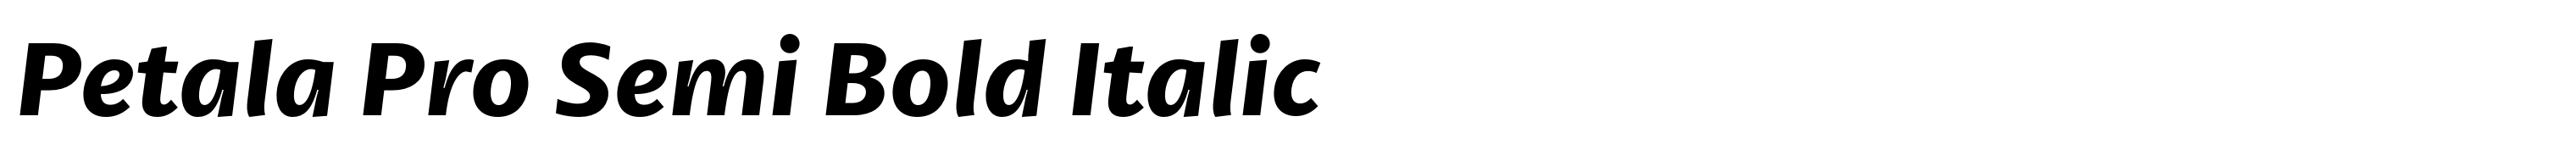 Petala Pro Semi Bold Italic